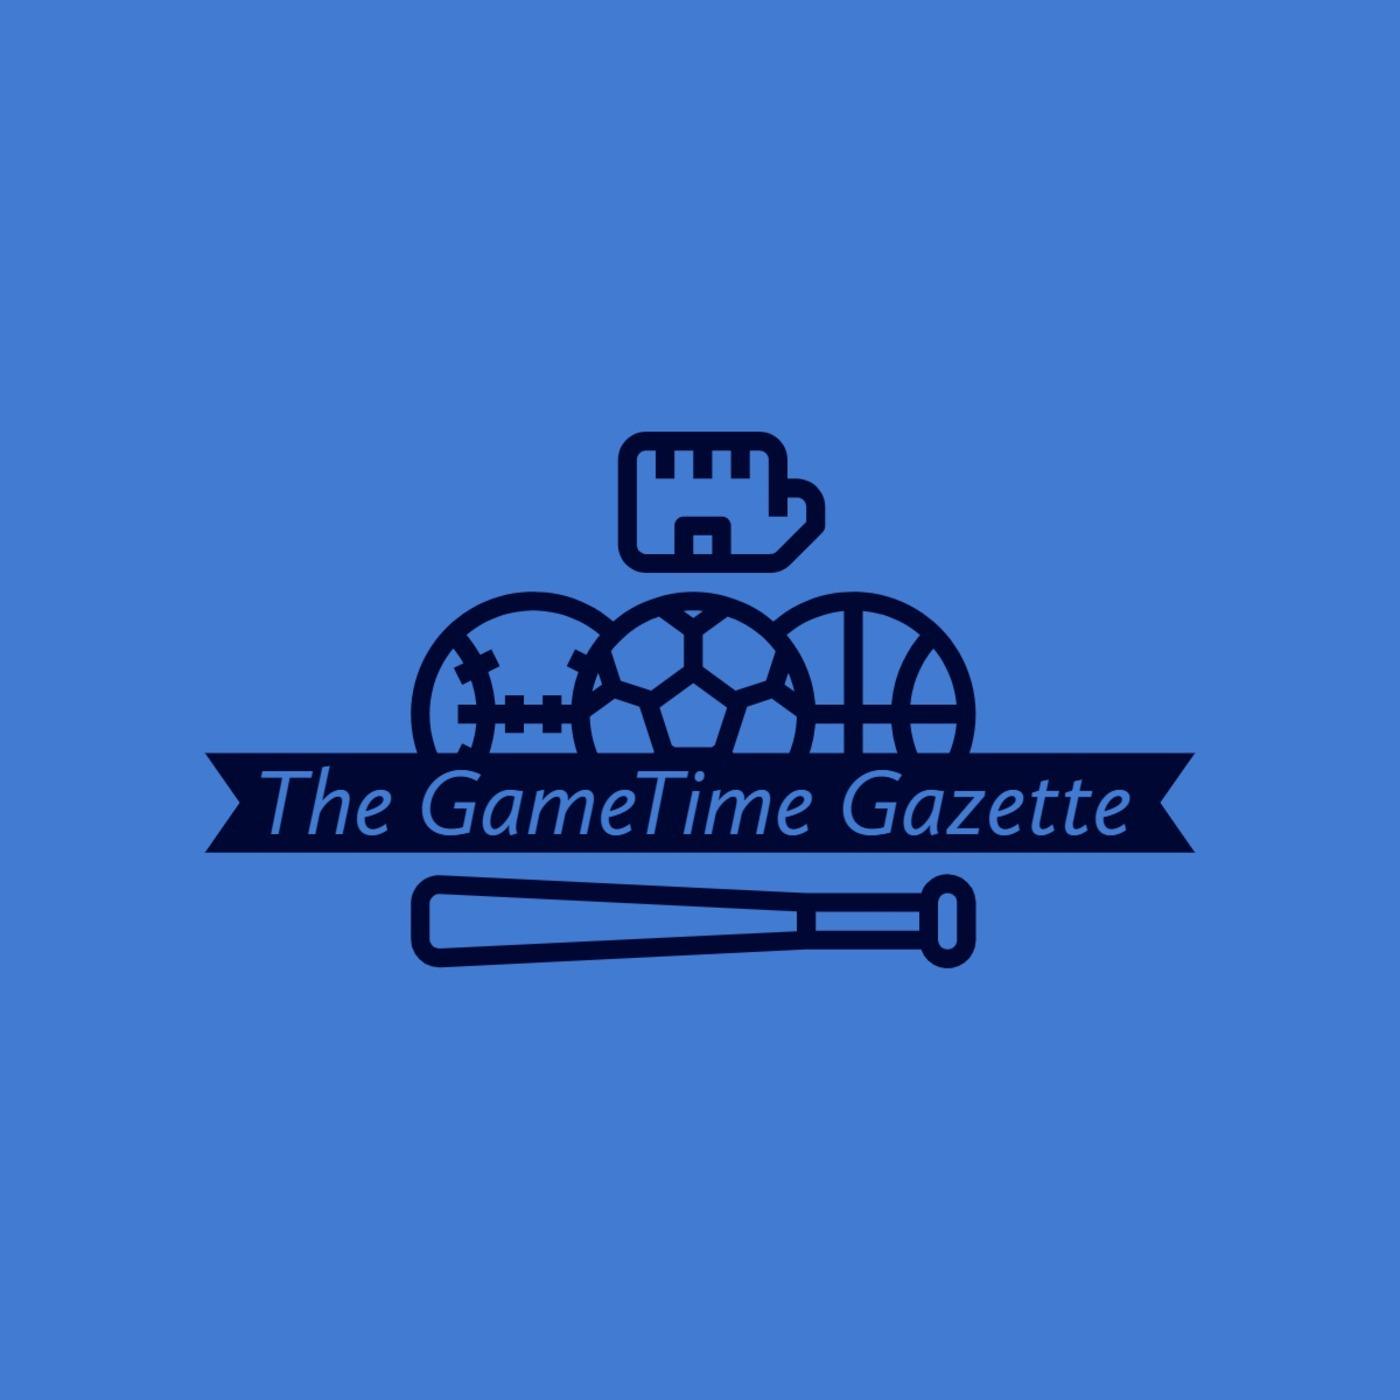 The GameTime Gazette